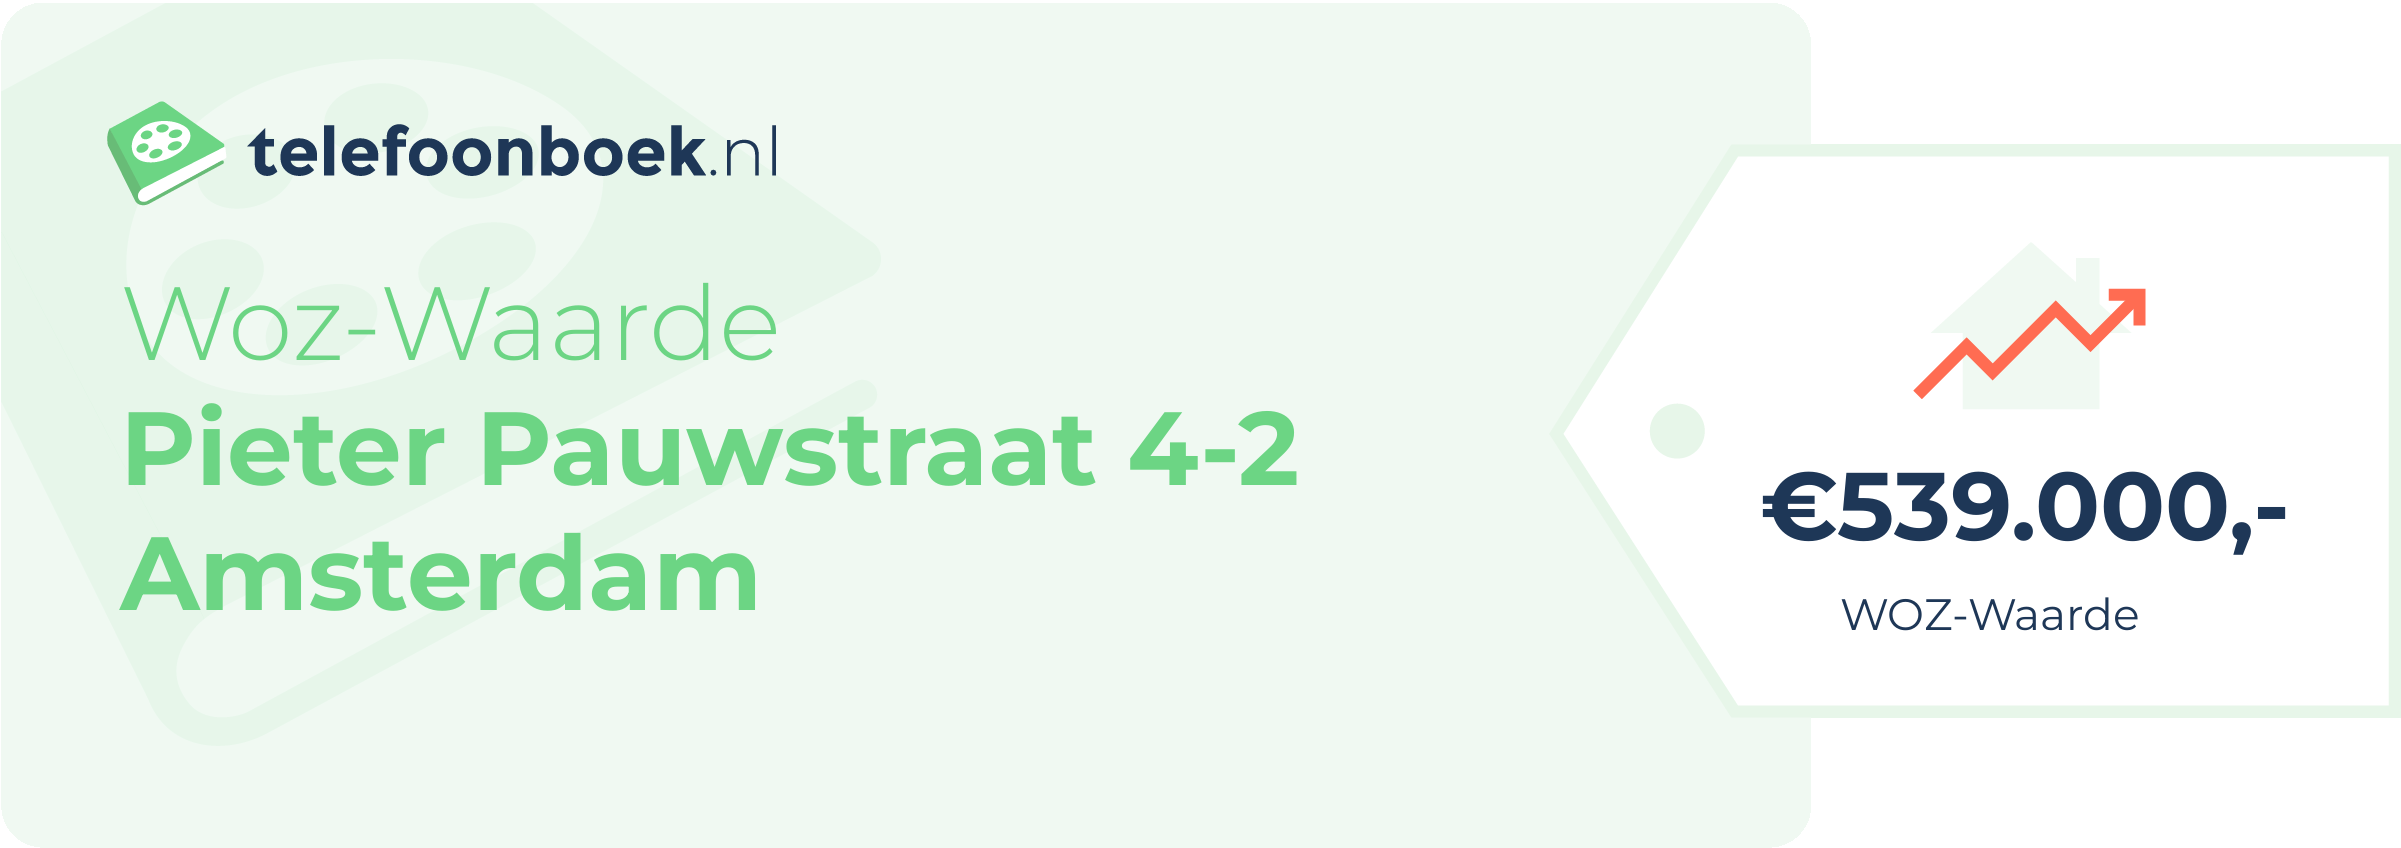 WOZ-waarde Pieter Pauwstraat 4-2 Amsterdam